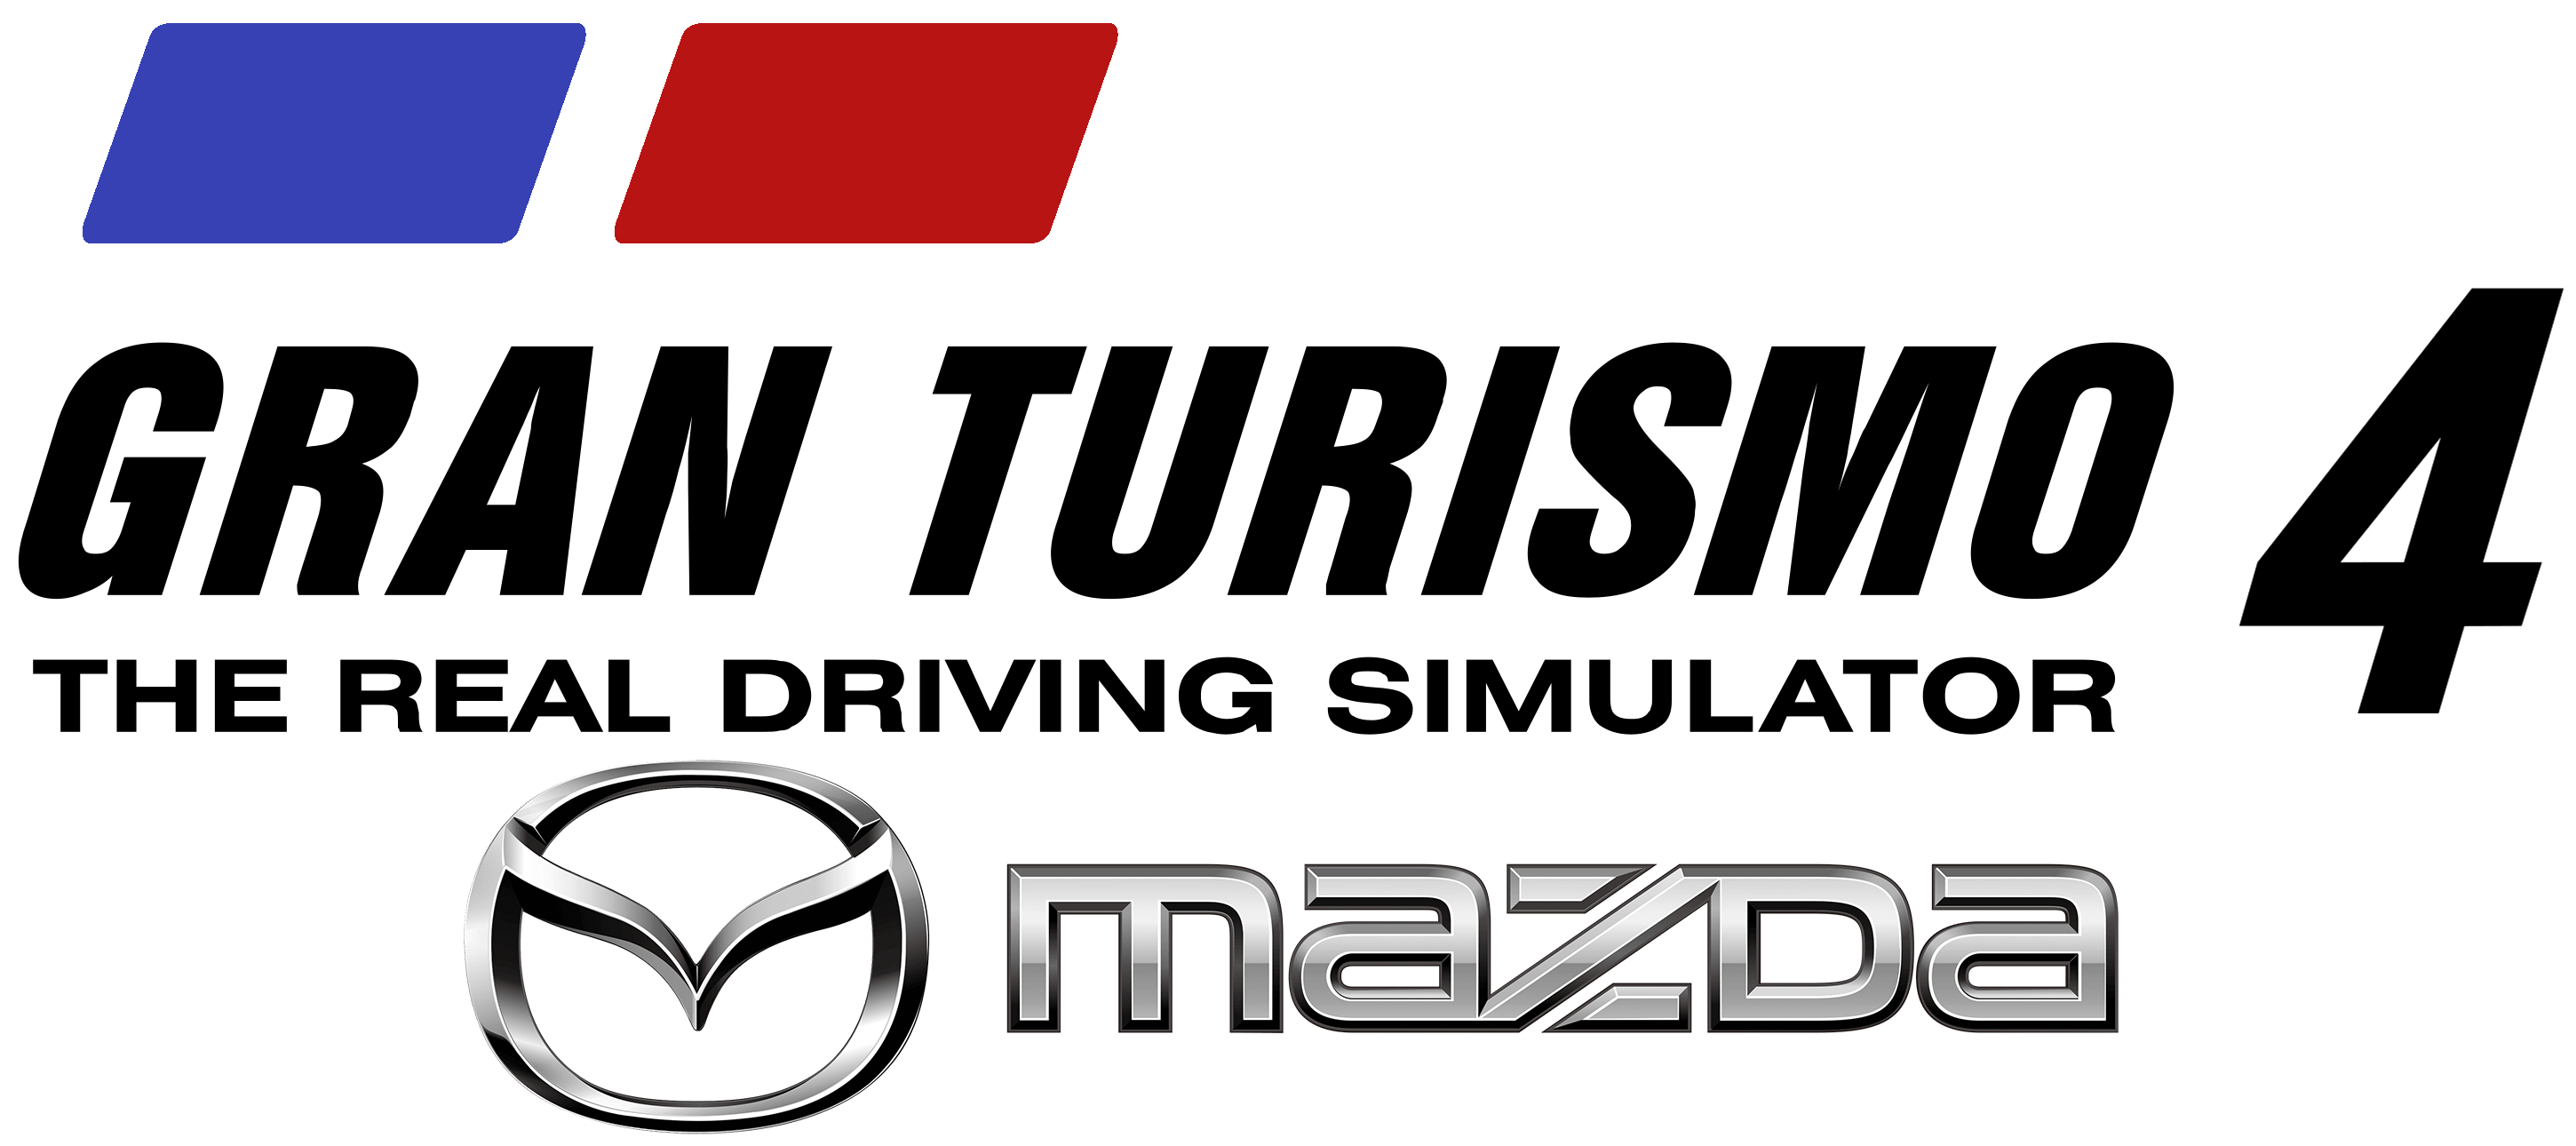 Gran Turismo 4/Mazda MX-5 Edition - The Cutting Room Floor